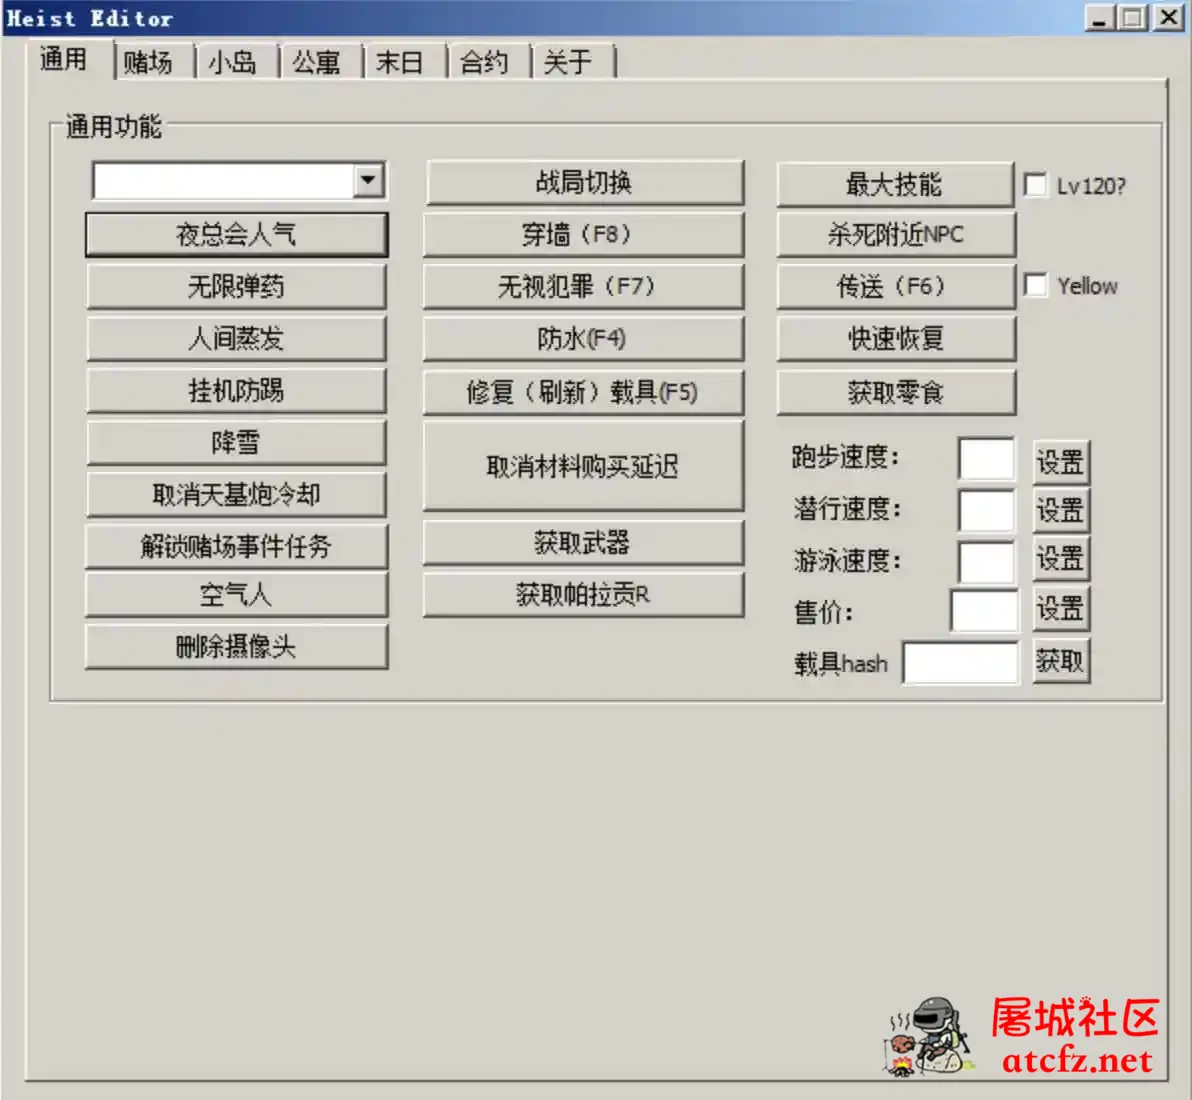 GTA5 Heist Editor外部抢劫编辑器 v3.5.7 屠城辅助网www.tcfz1.com7643